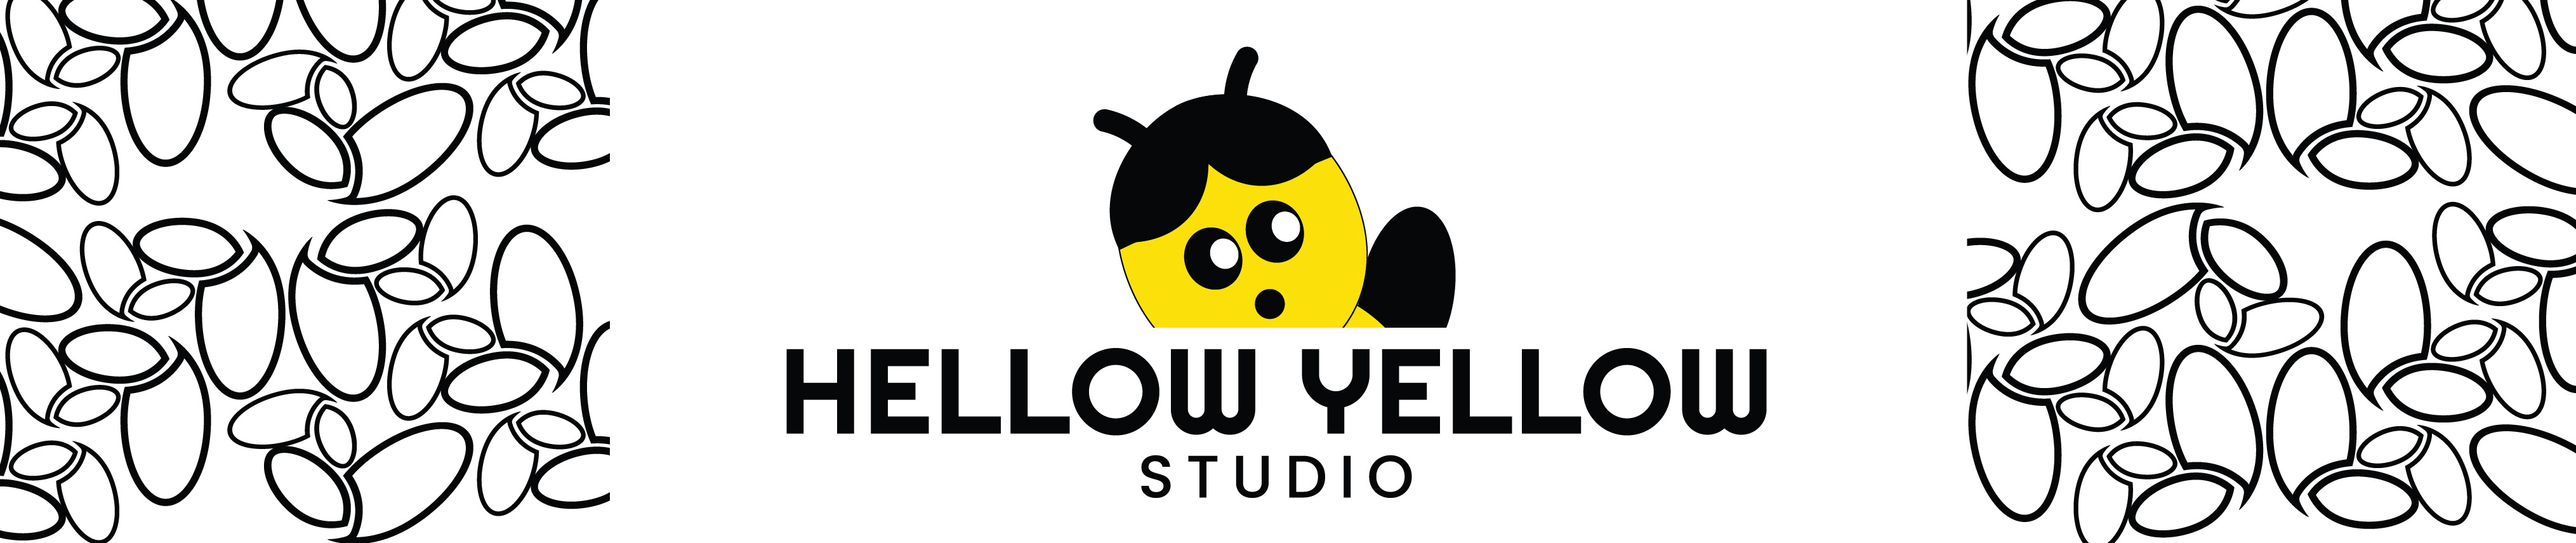 HELLOW YELLOW STUDIO's profile banner